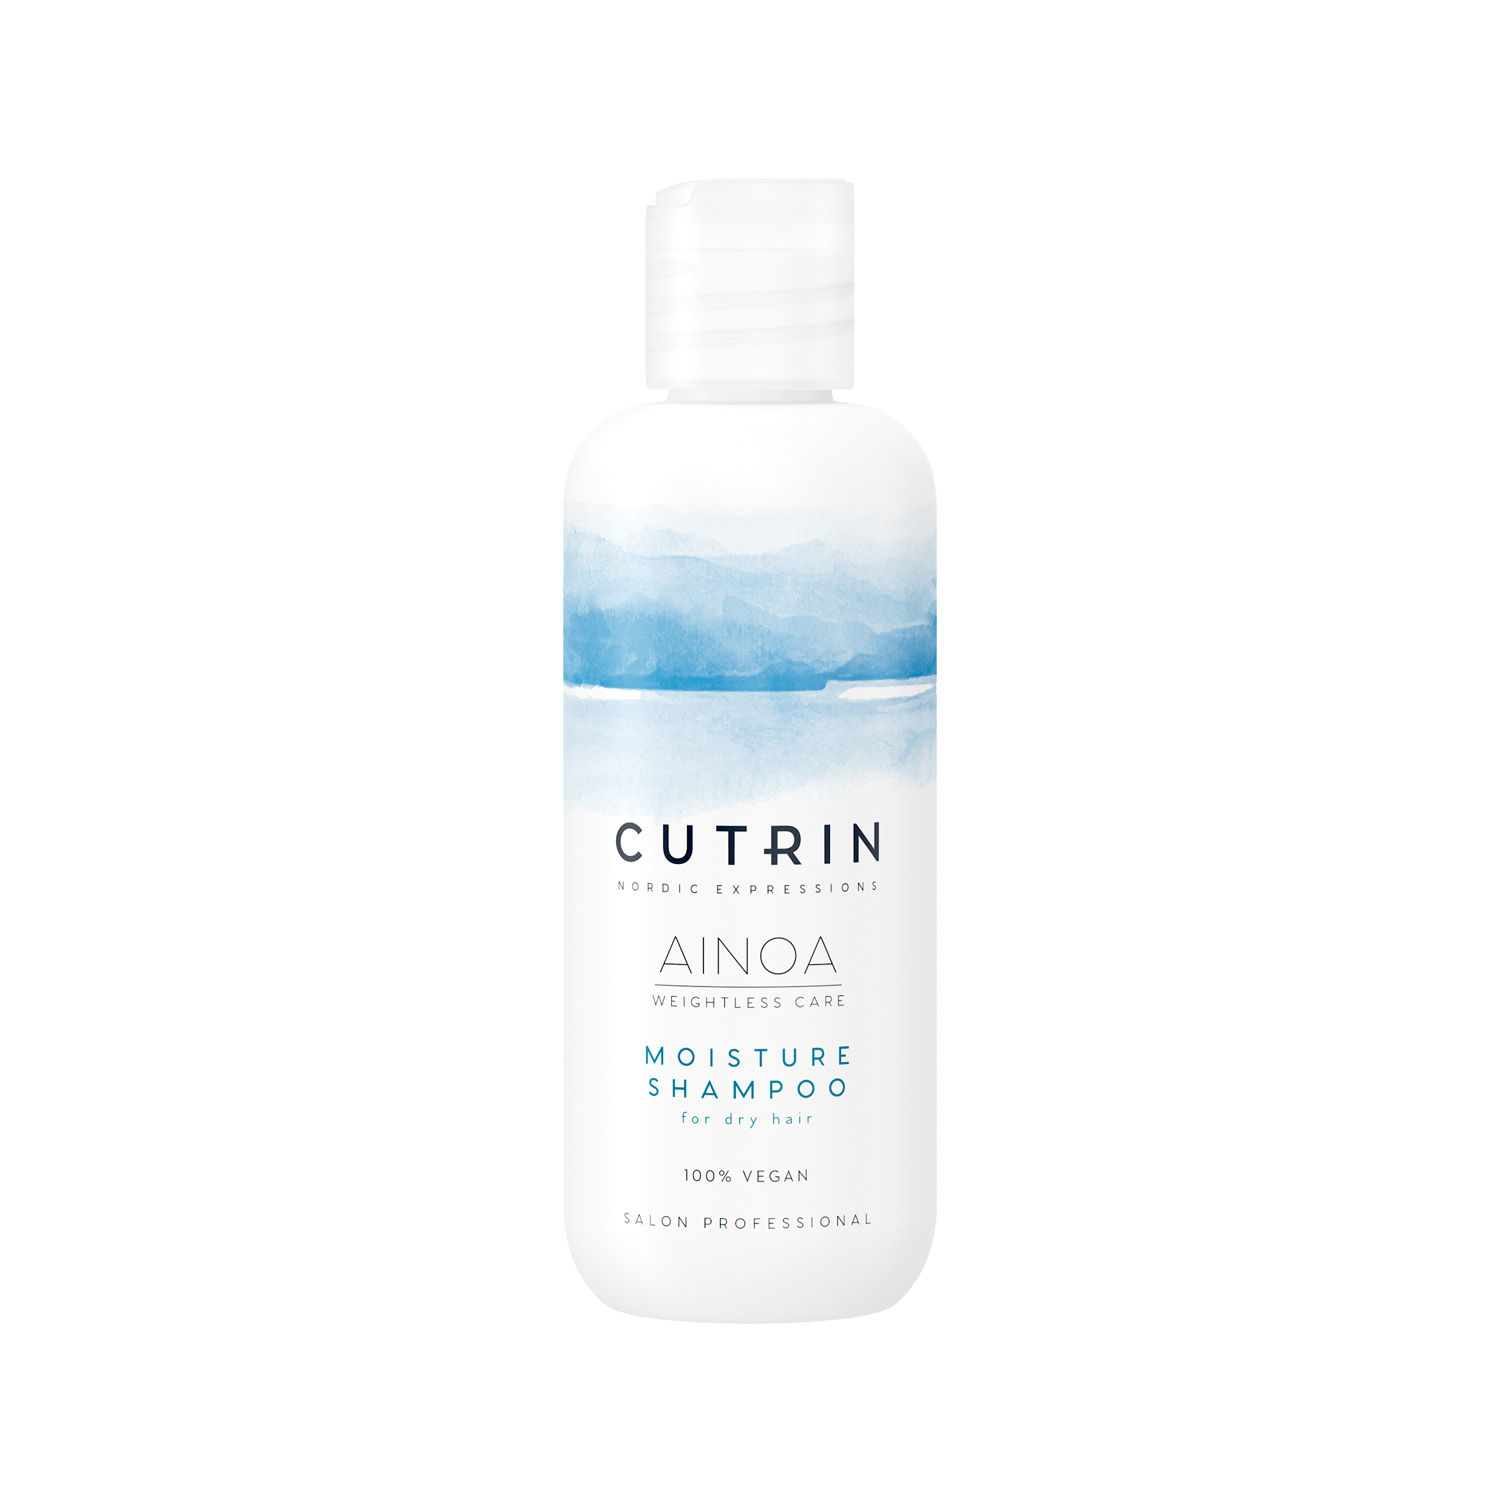 шампунь для увлажнения мини формат cutrin ainoa moisture shampoo 100 Cutrin Шампунь Moisture для увлажнения, 100 мл (Cutrin, Ainoa)